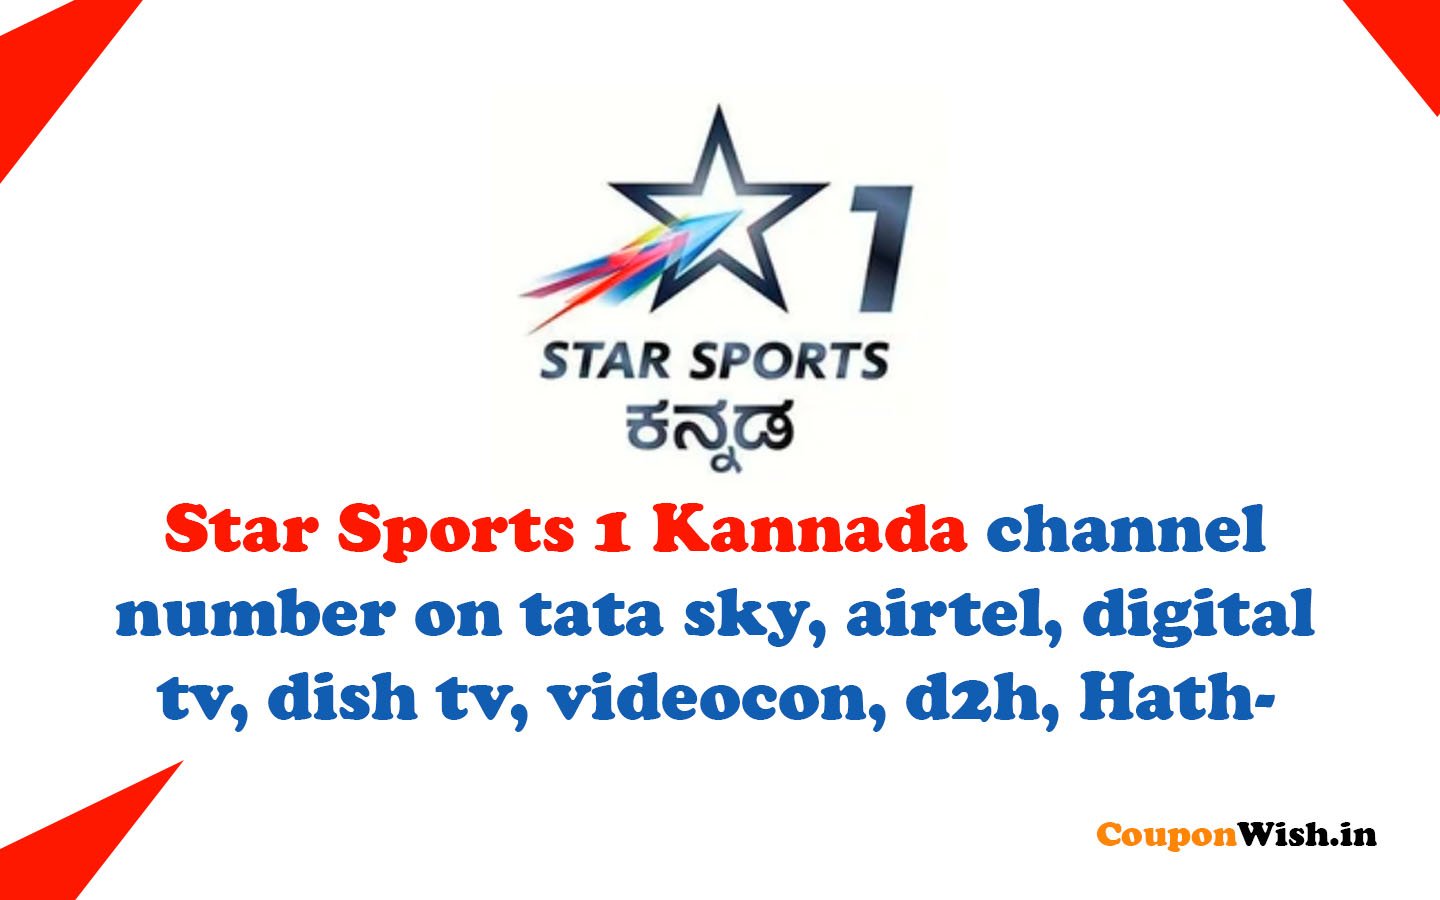 Star Sports 1 Kannada channel number on tata sky, airtel, digital tv, dish tv, videocon, d2h, Hathway, sun direct tv